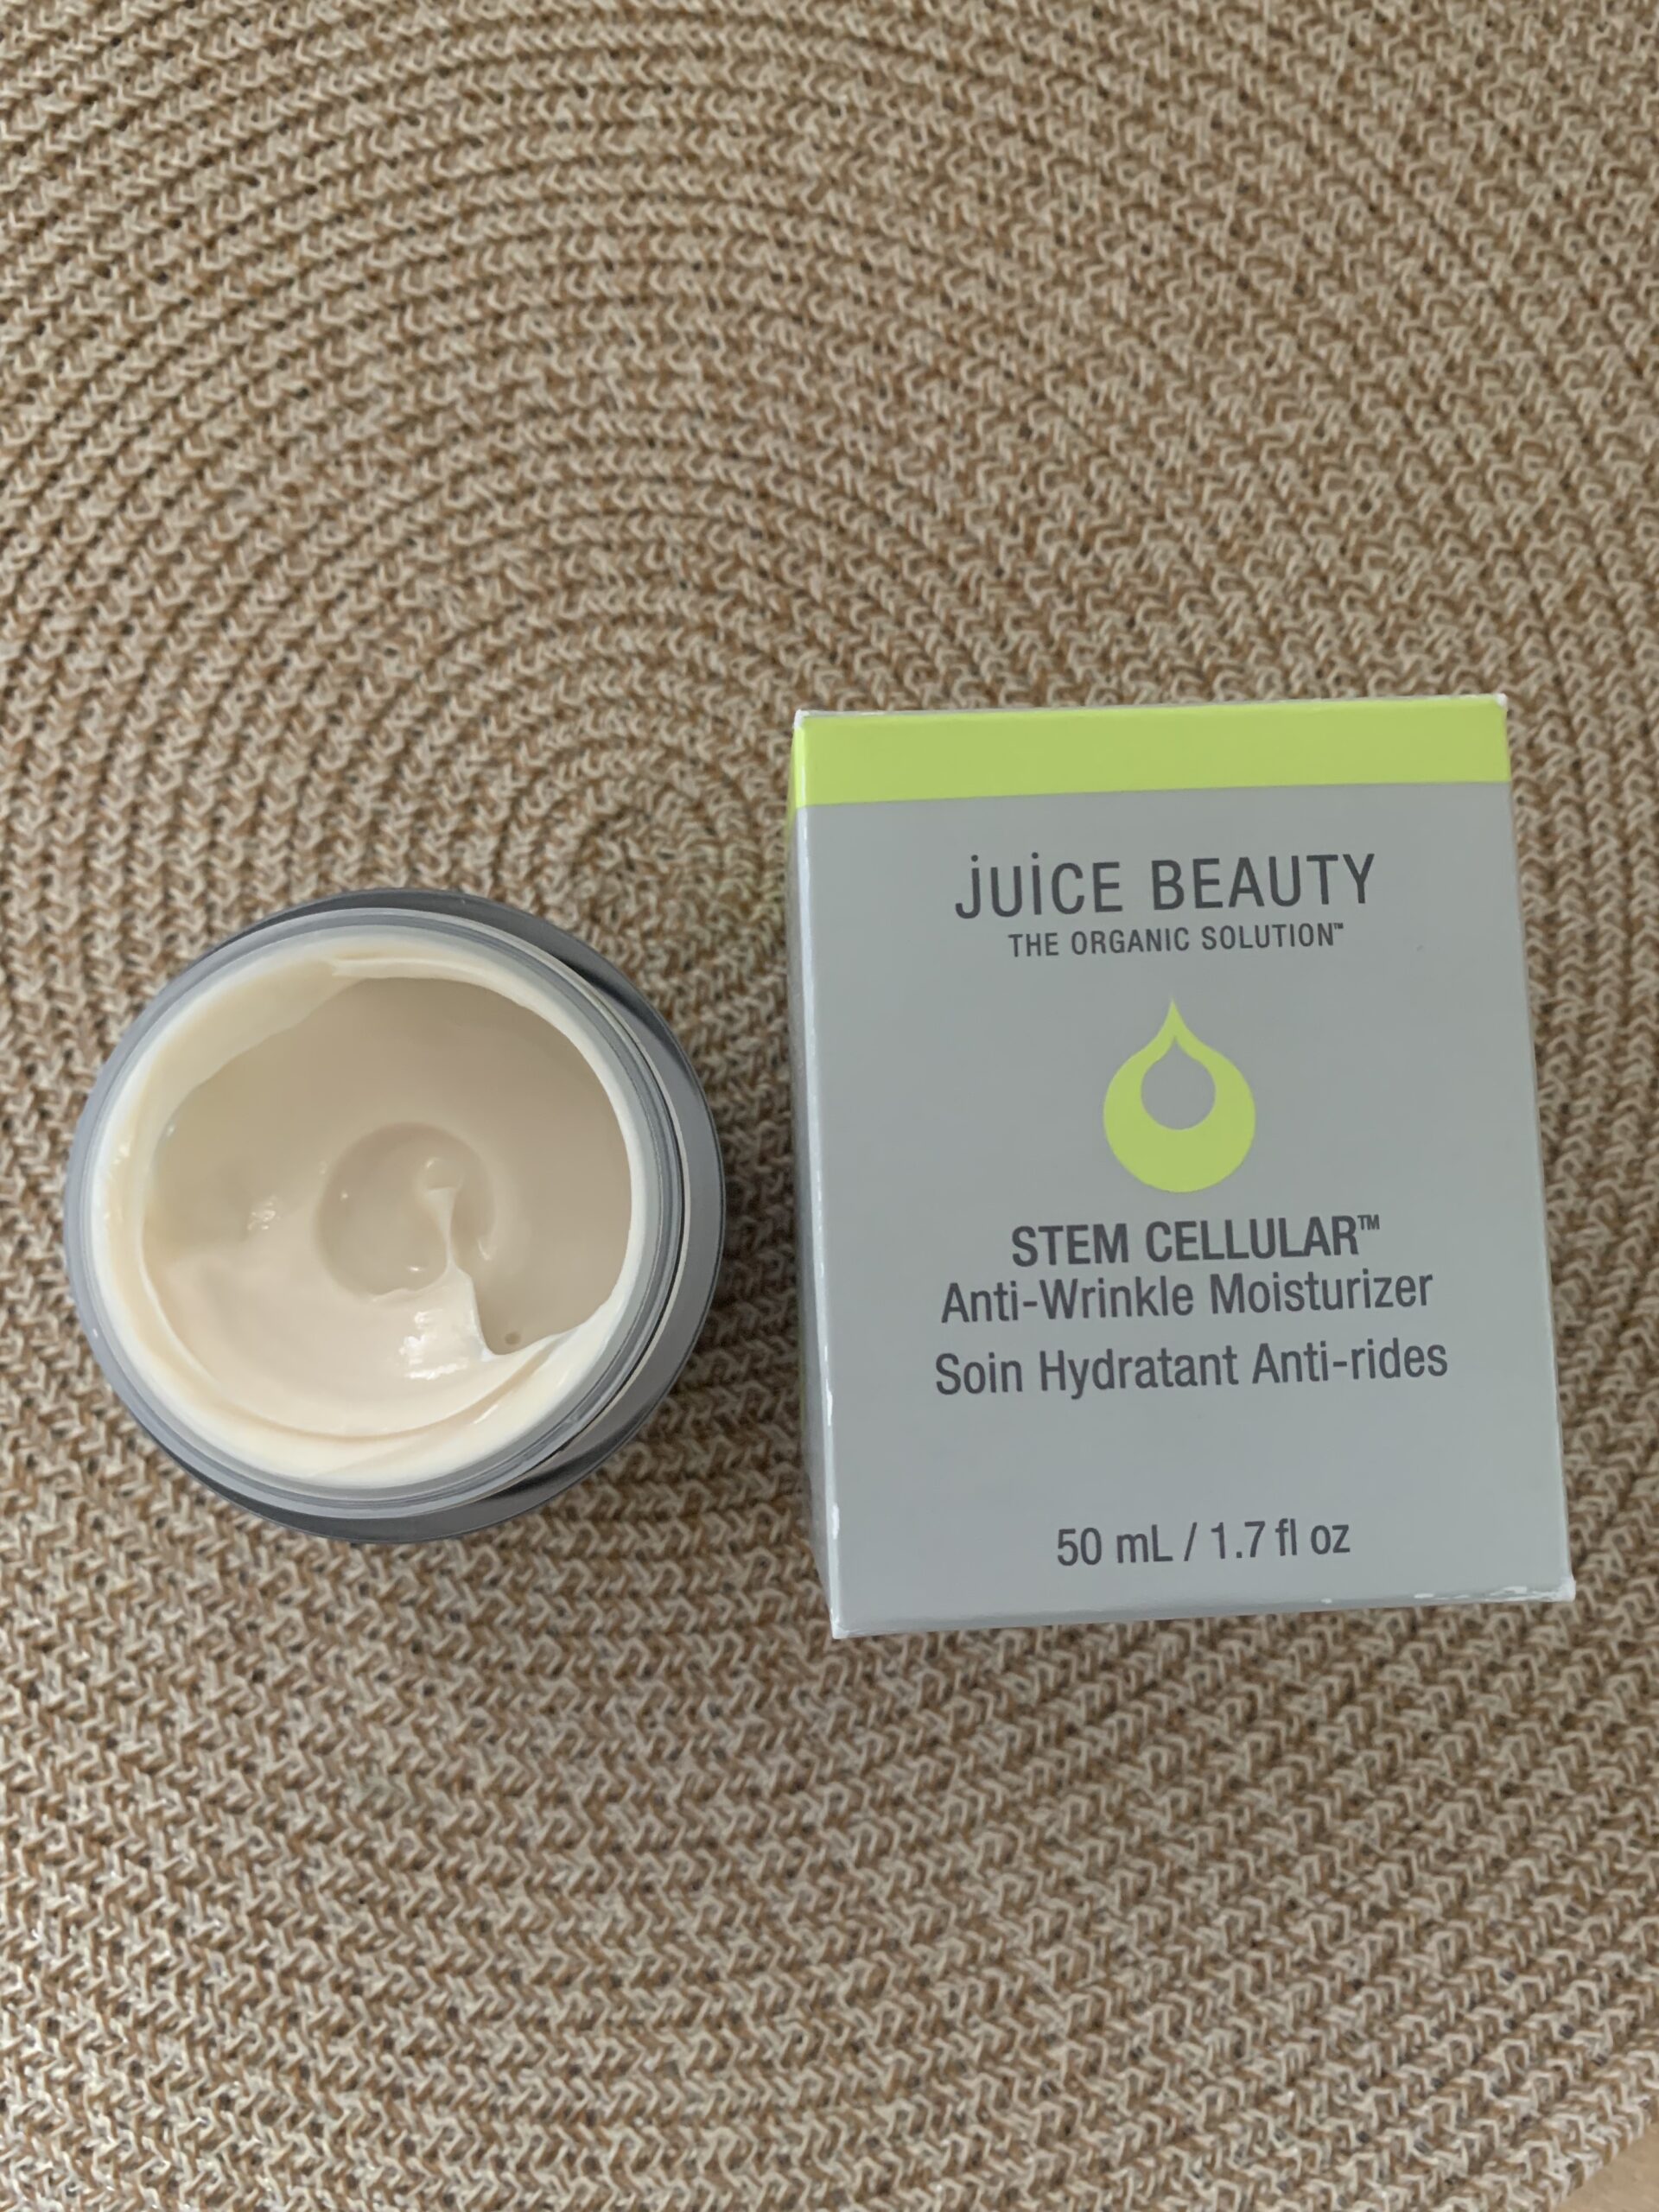 Juice beauty anti-wrinkle moisturizer